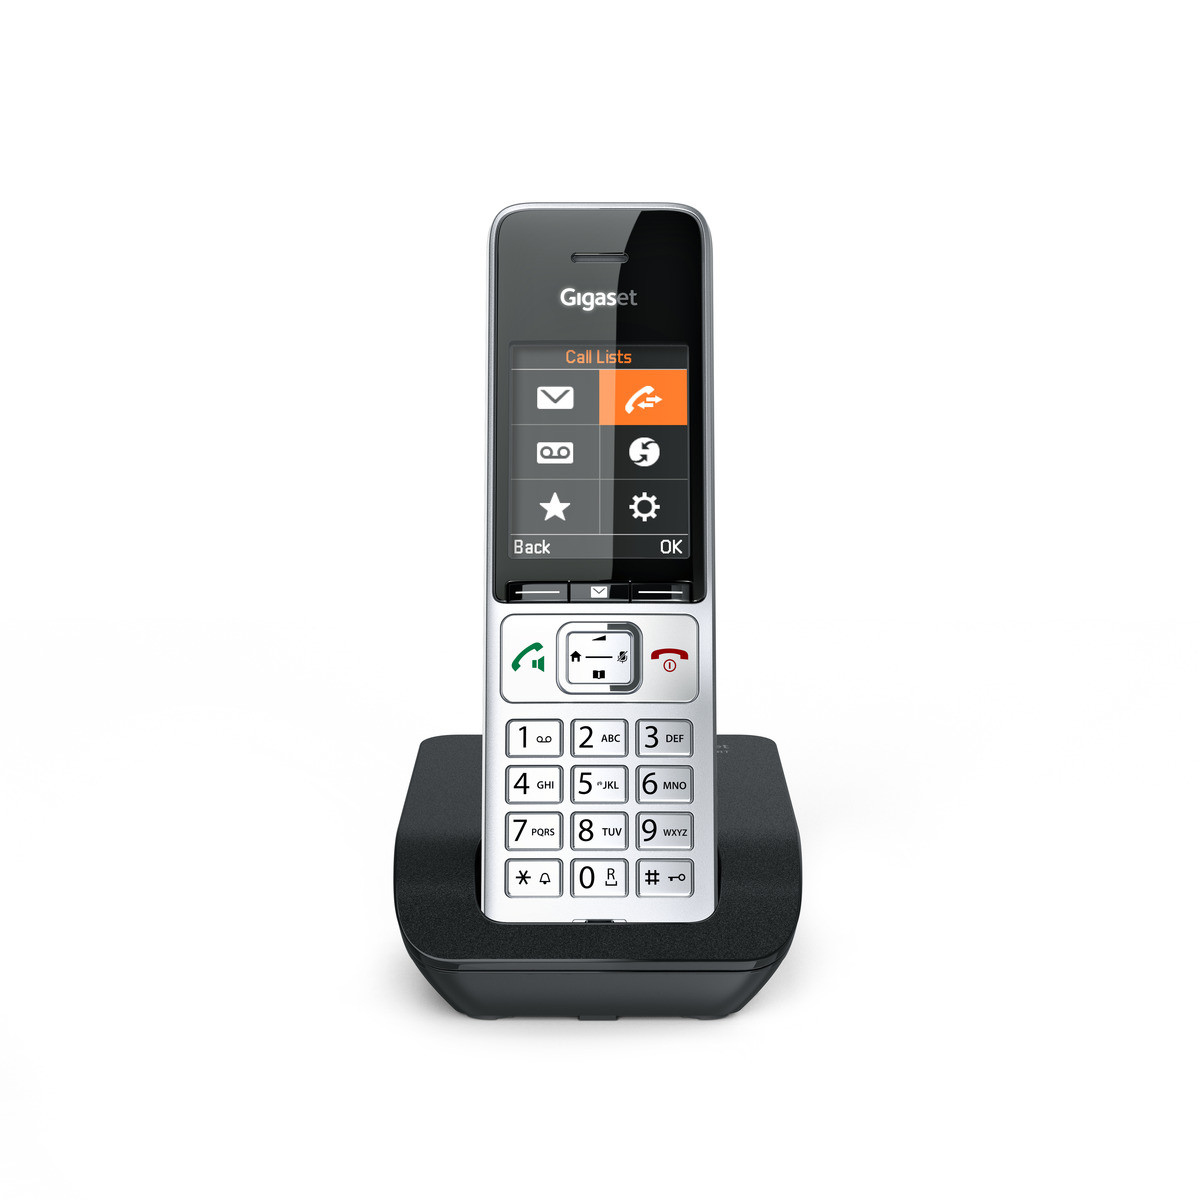 S30852-H3003-B101 UNIFY GIGASET OPENSTAGE COMFORT 500 - DECT telephone - Wireless handset - Speakerphone - 200 entries - Caller ID - Black - Silver